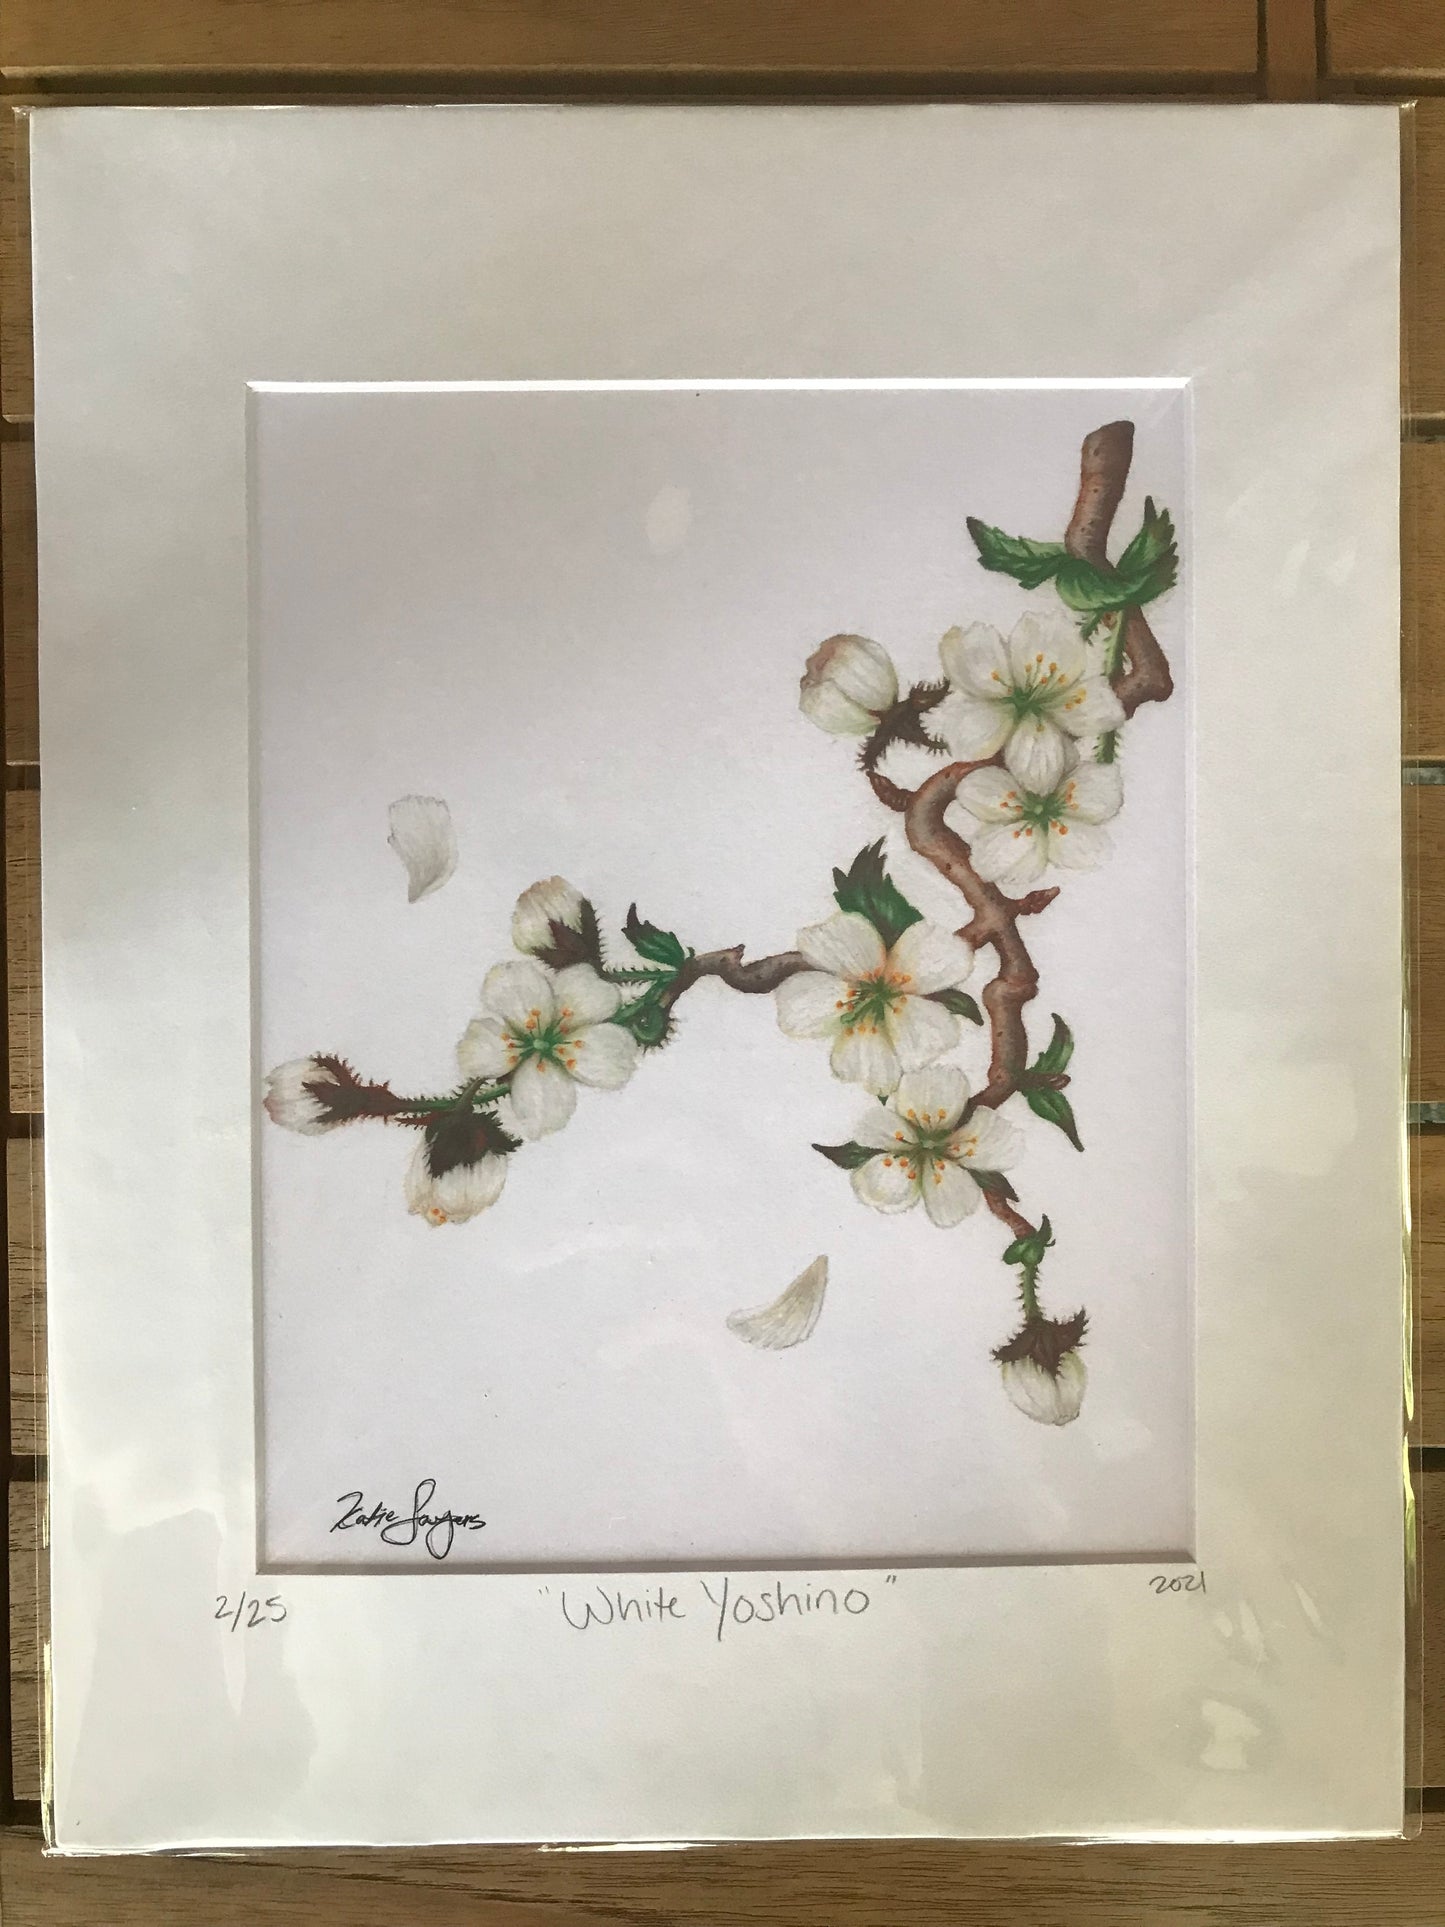 White Yoshino Cherry Blossoms Botanical Illustration Print